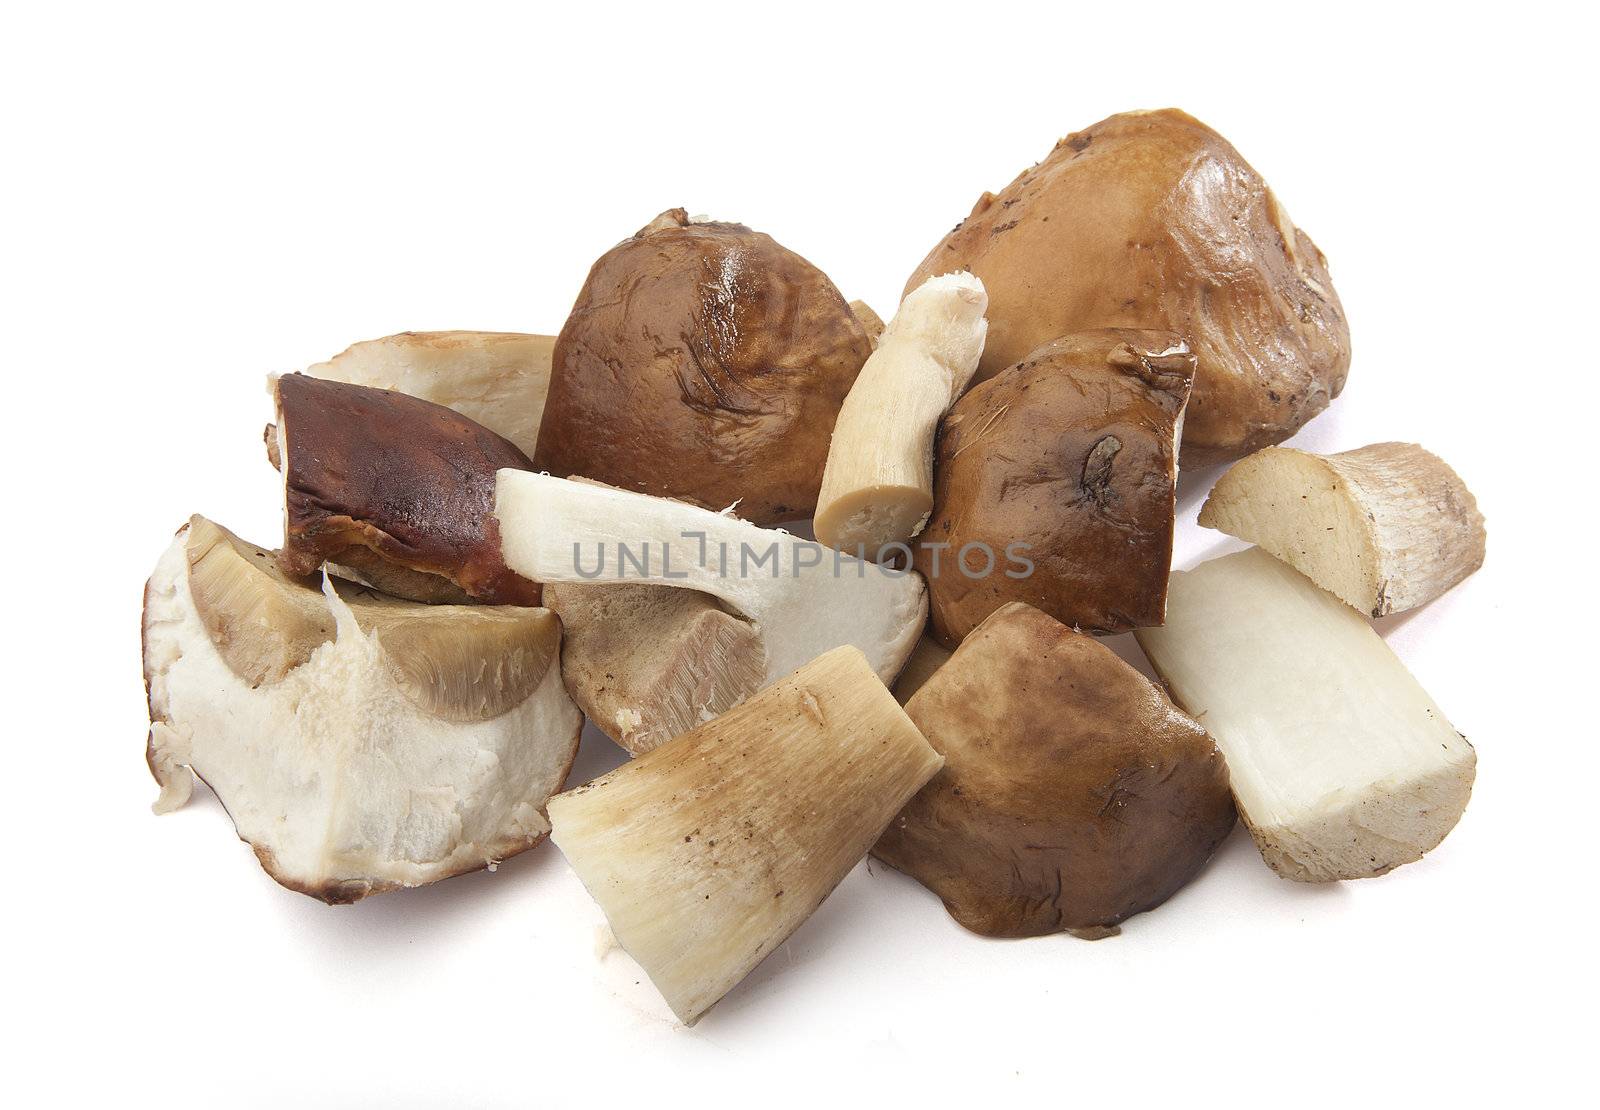 White mushrooms by Angorius